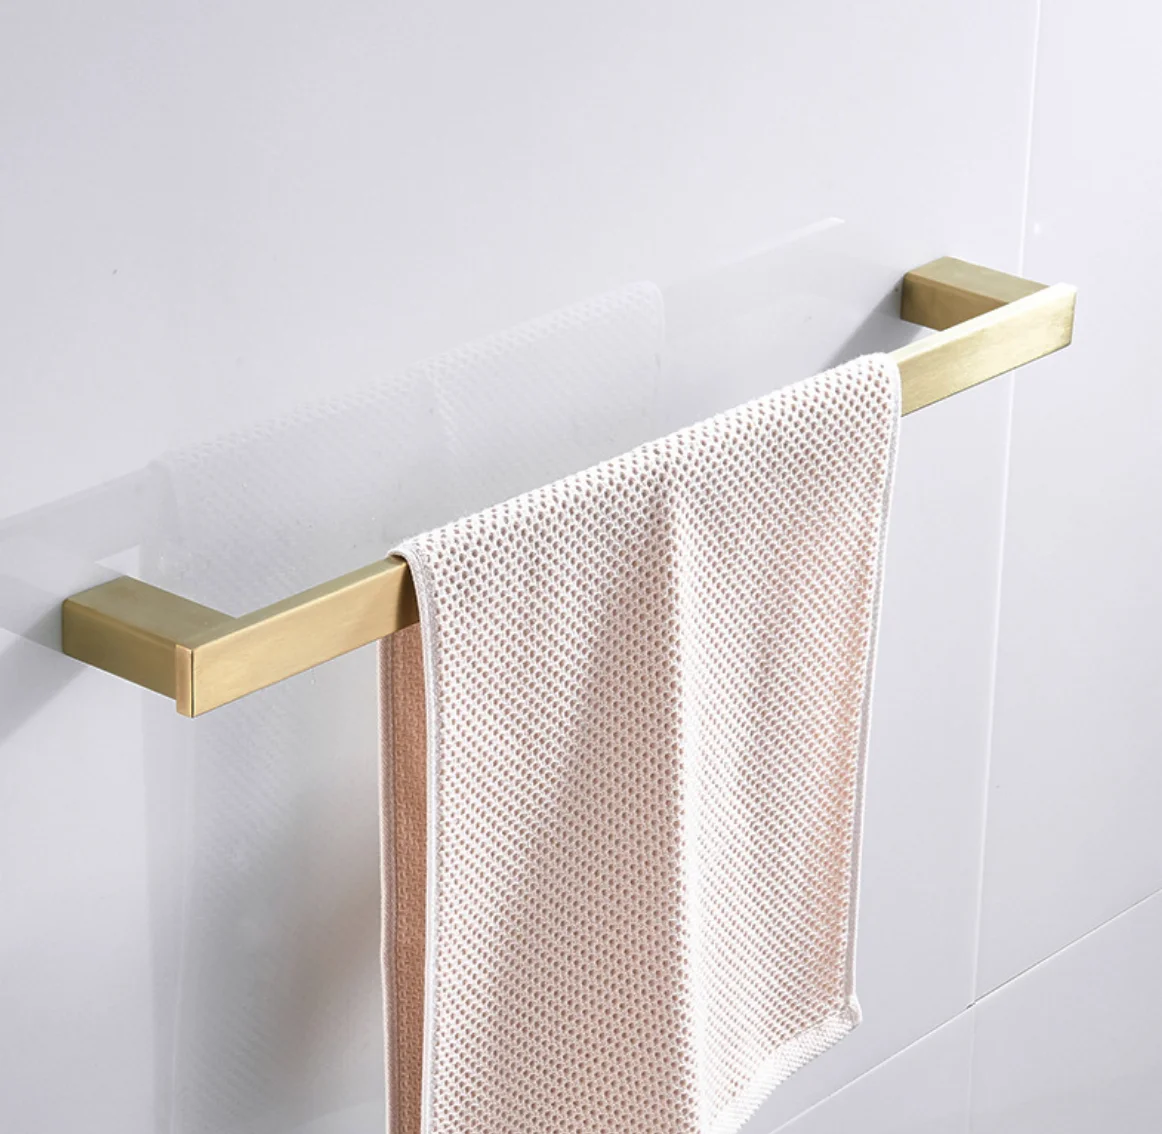 Brushed Gold Towel Bar Kit 4 Piece Bathroom Accessories Hardware Set